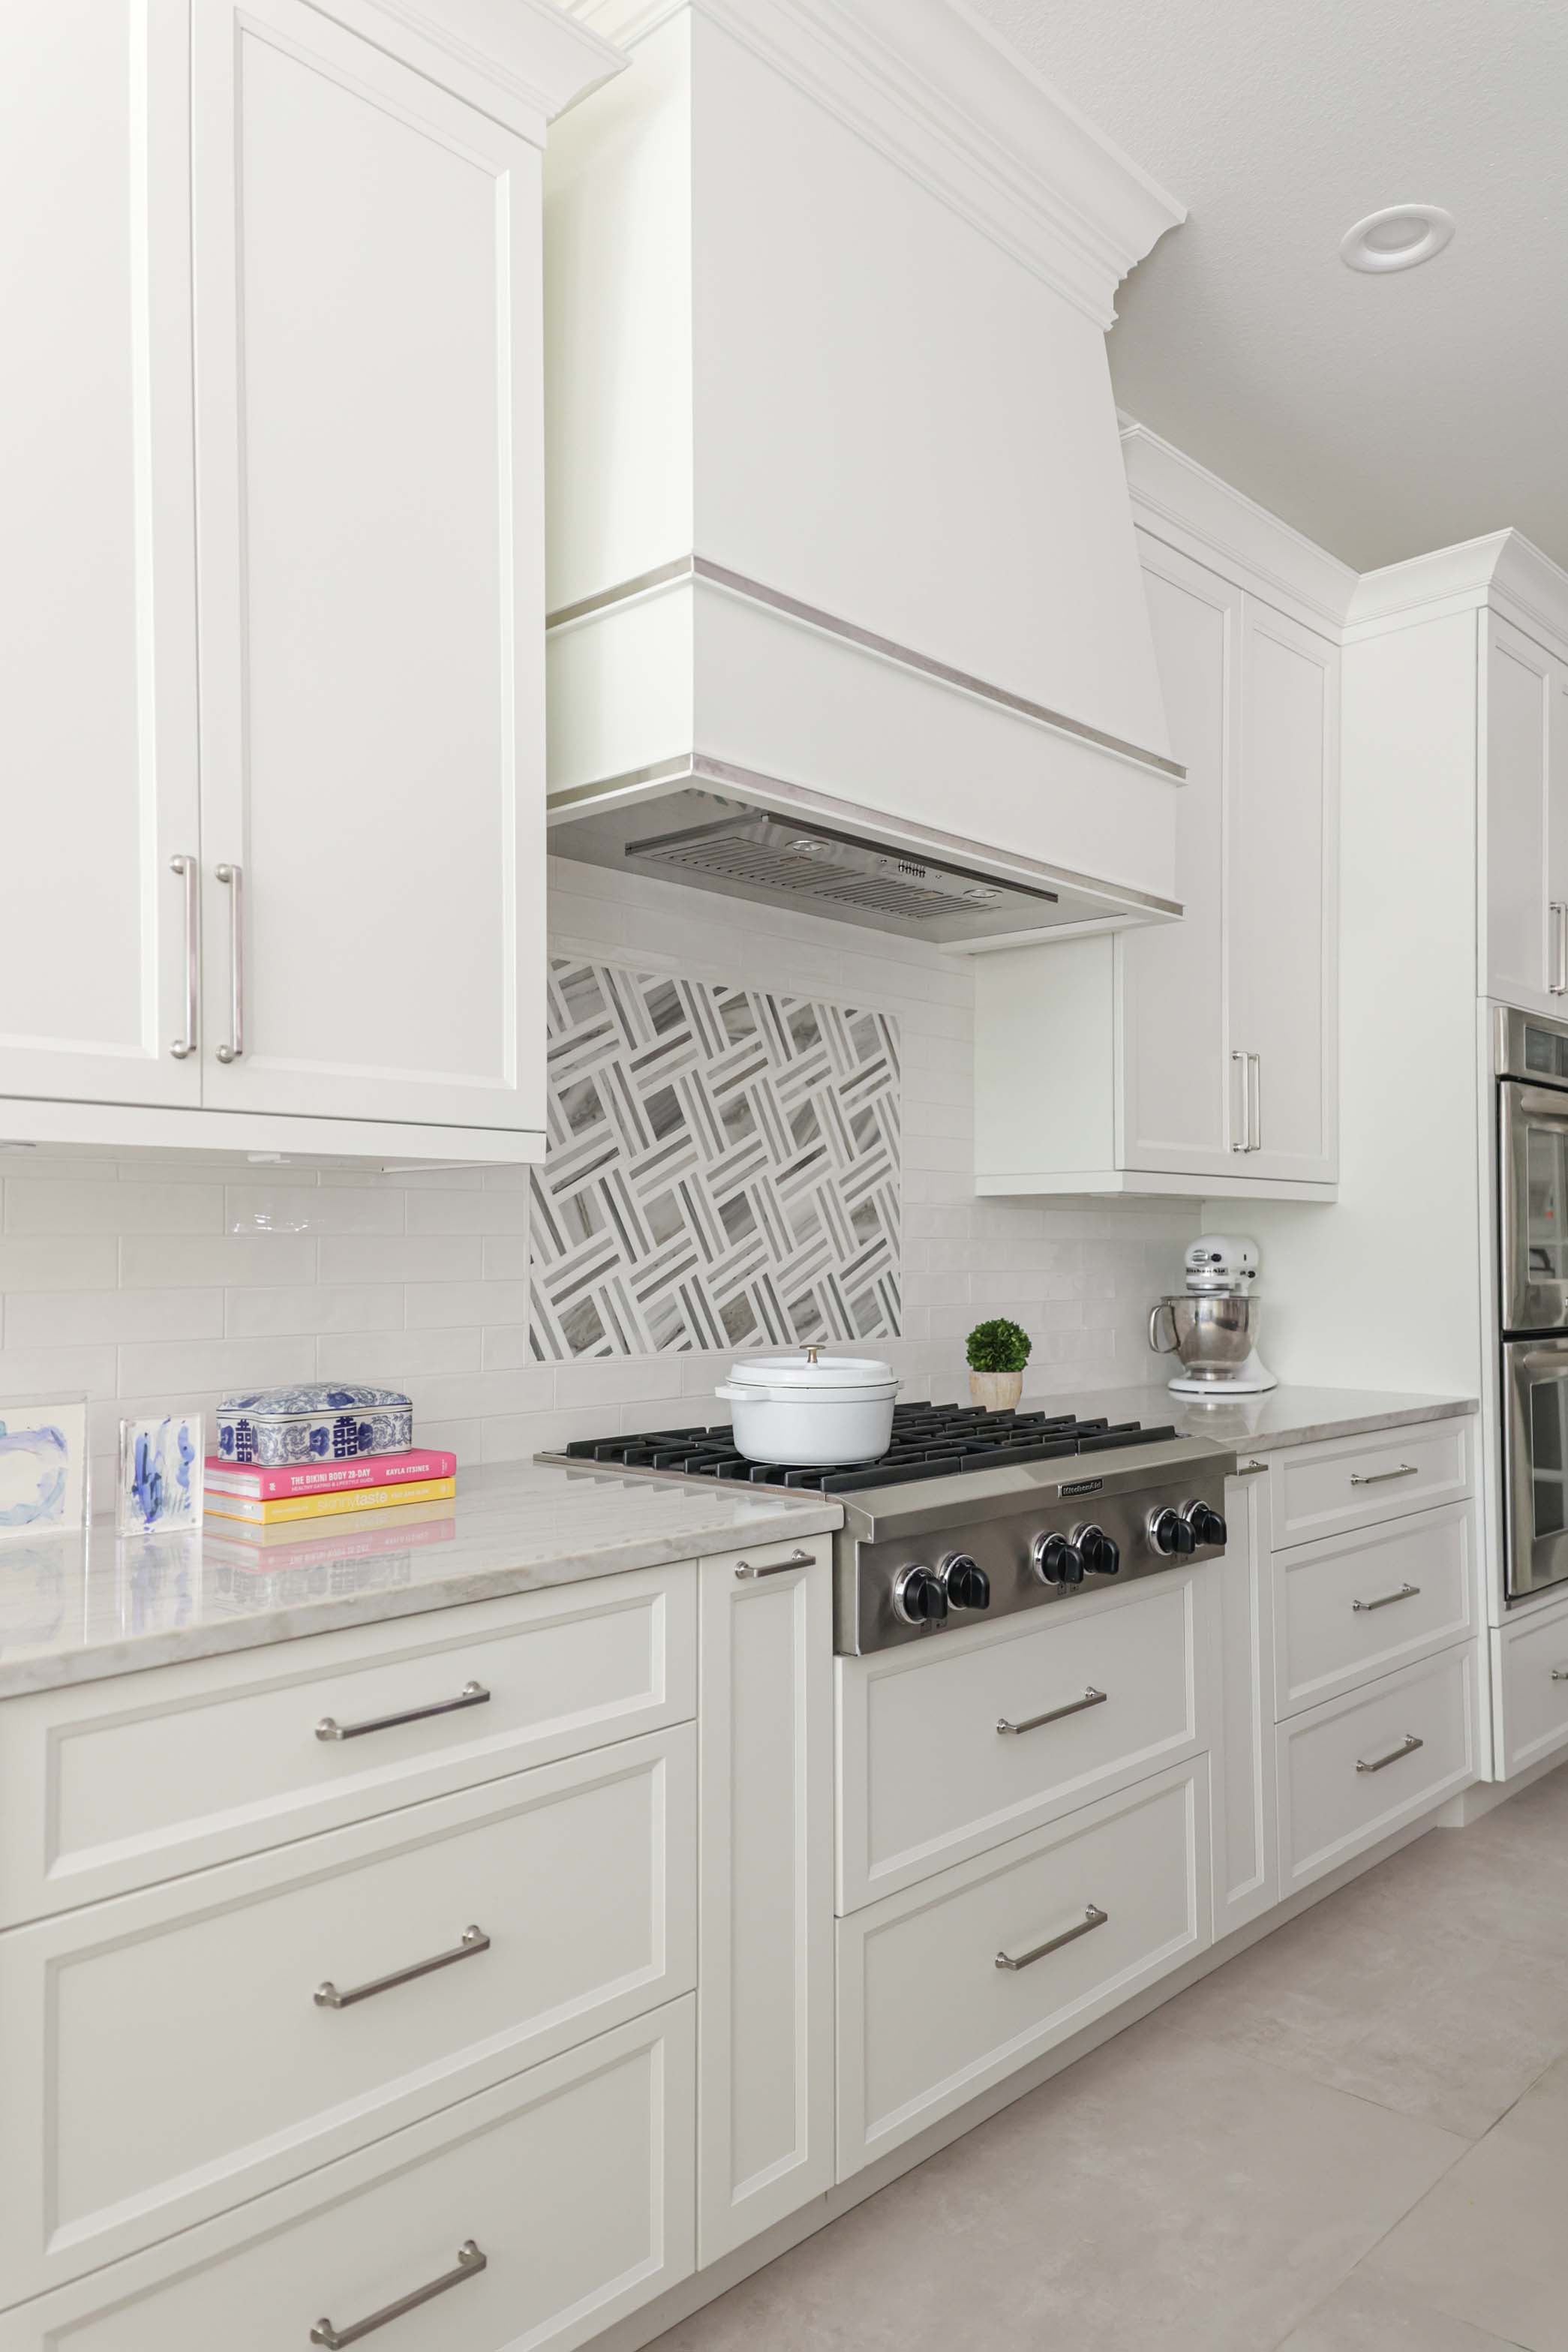 Cabinet storage Kitchenaid rangetop, decorative vent hood, tile backsplash Kitchen Ideas Tulsa kitchen design and remodel